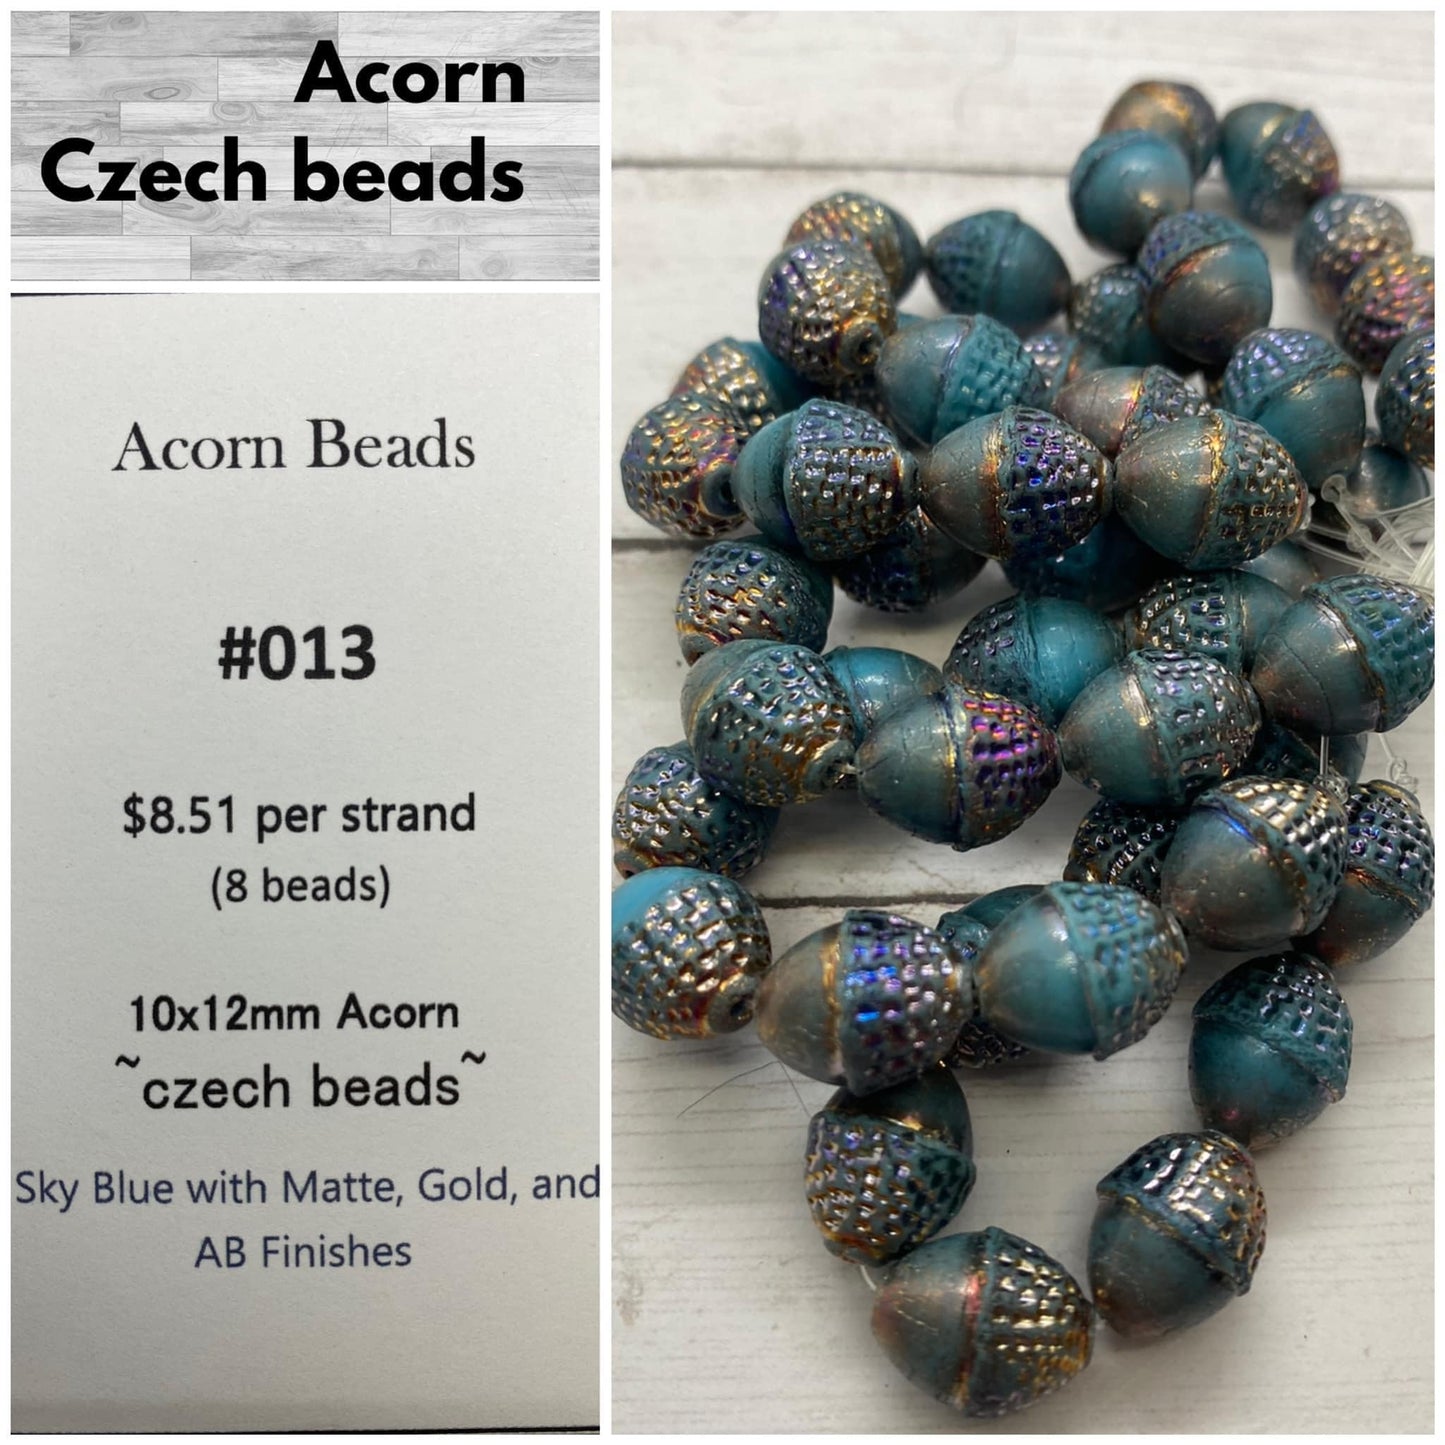 Acorn Beads 10x12mm #013